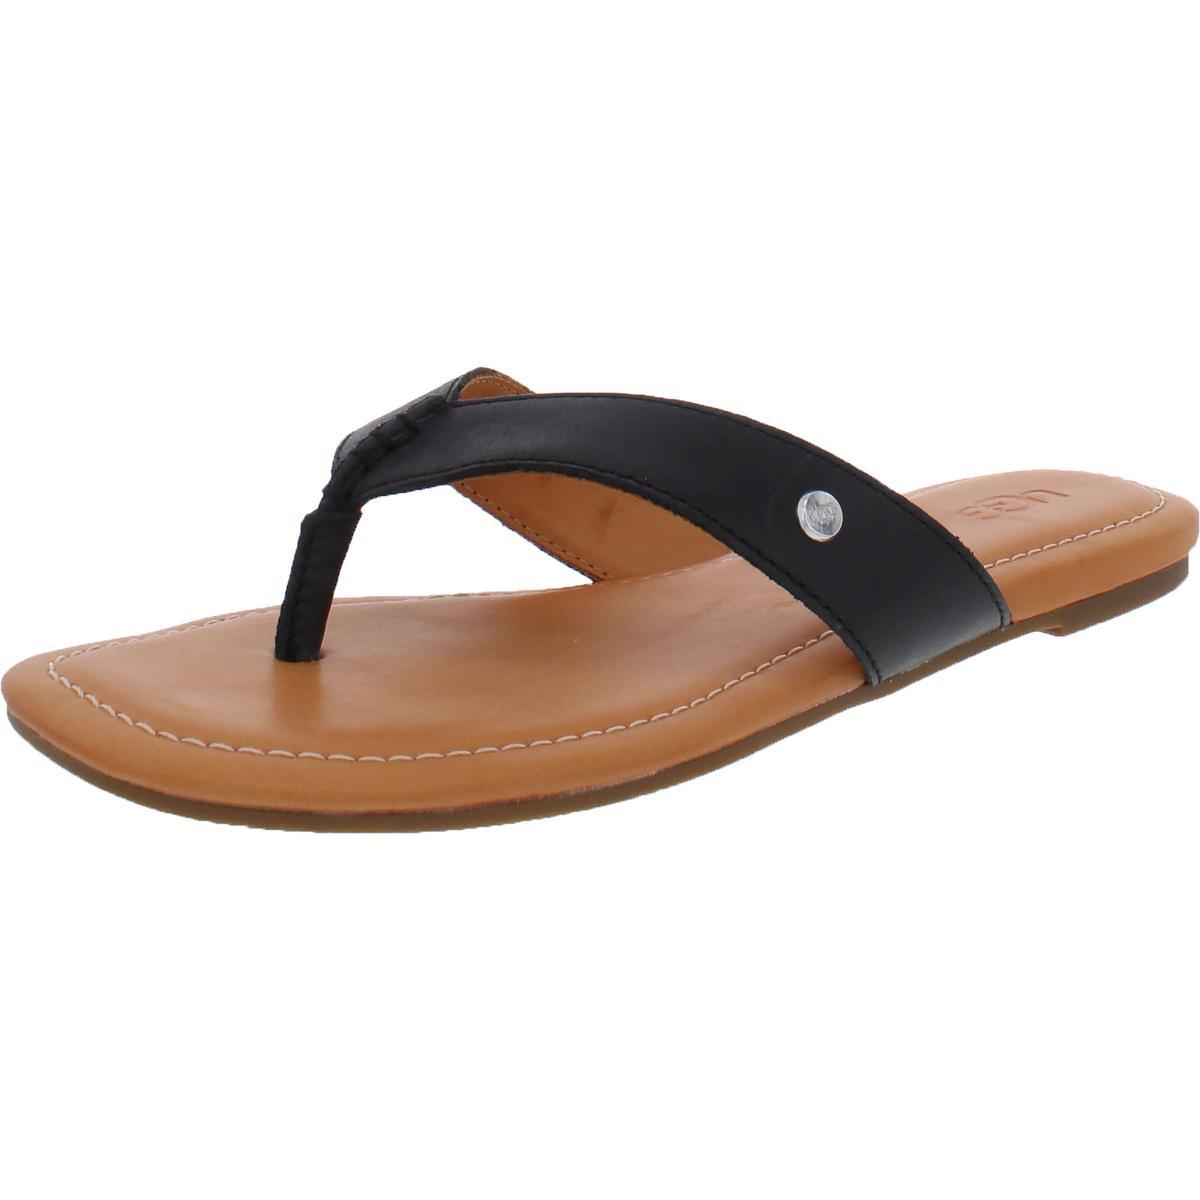 Ugg Womens Tuolumne Leather Thong Slides Flat Sandals Shoes Bhfo 9982 Black